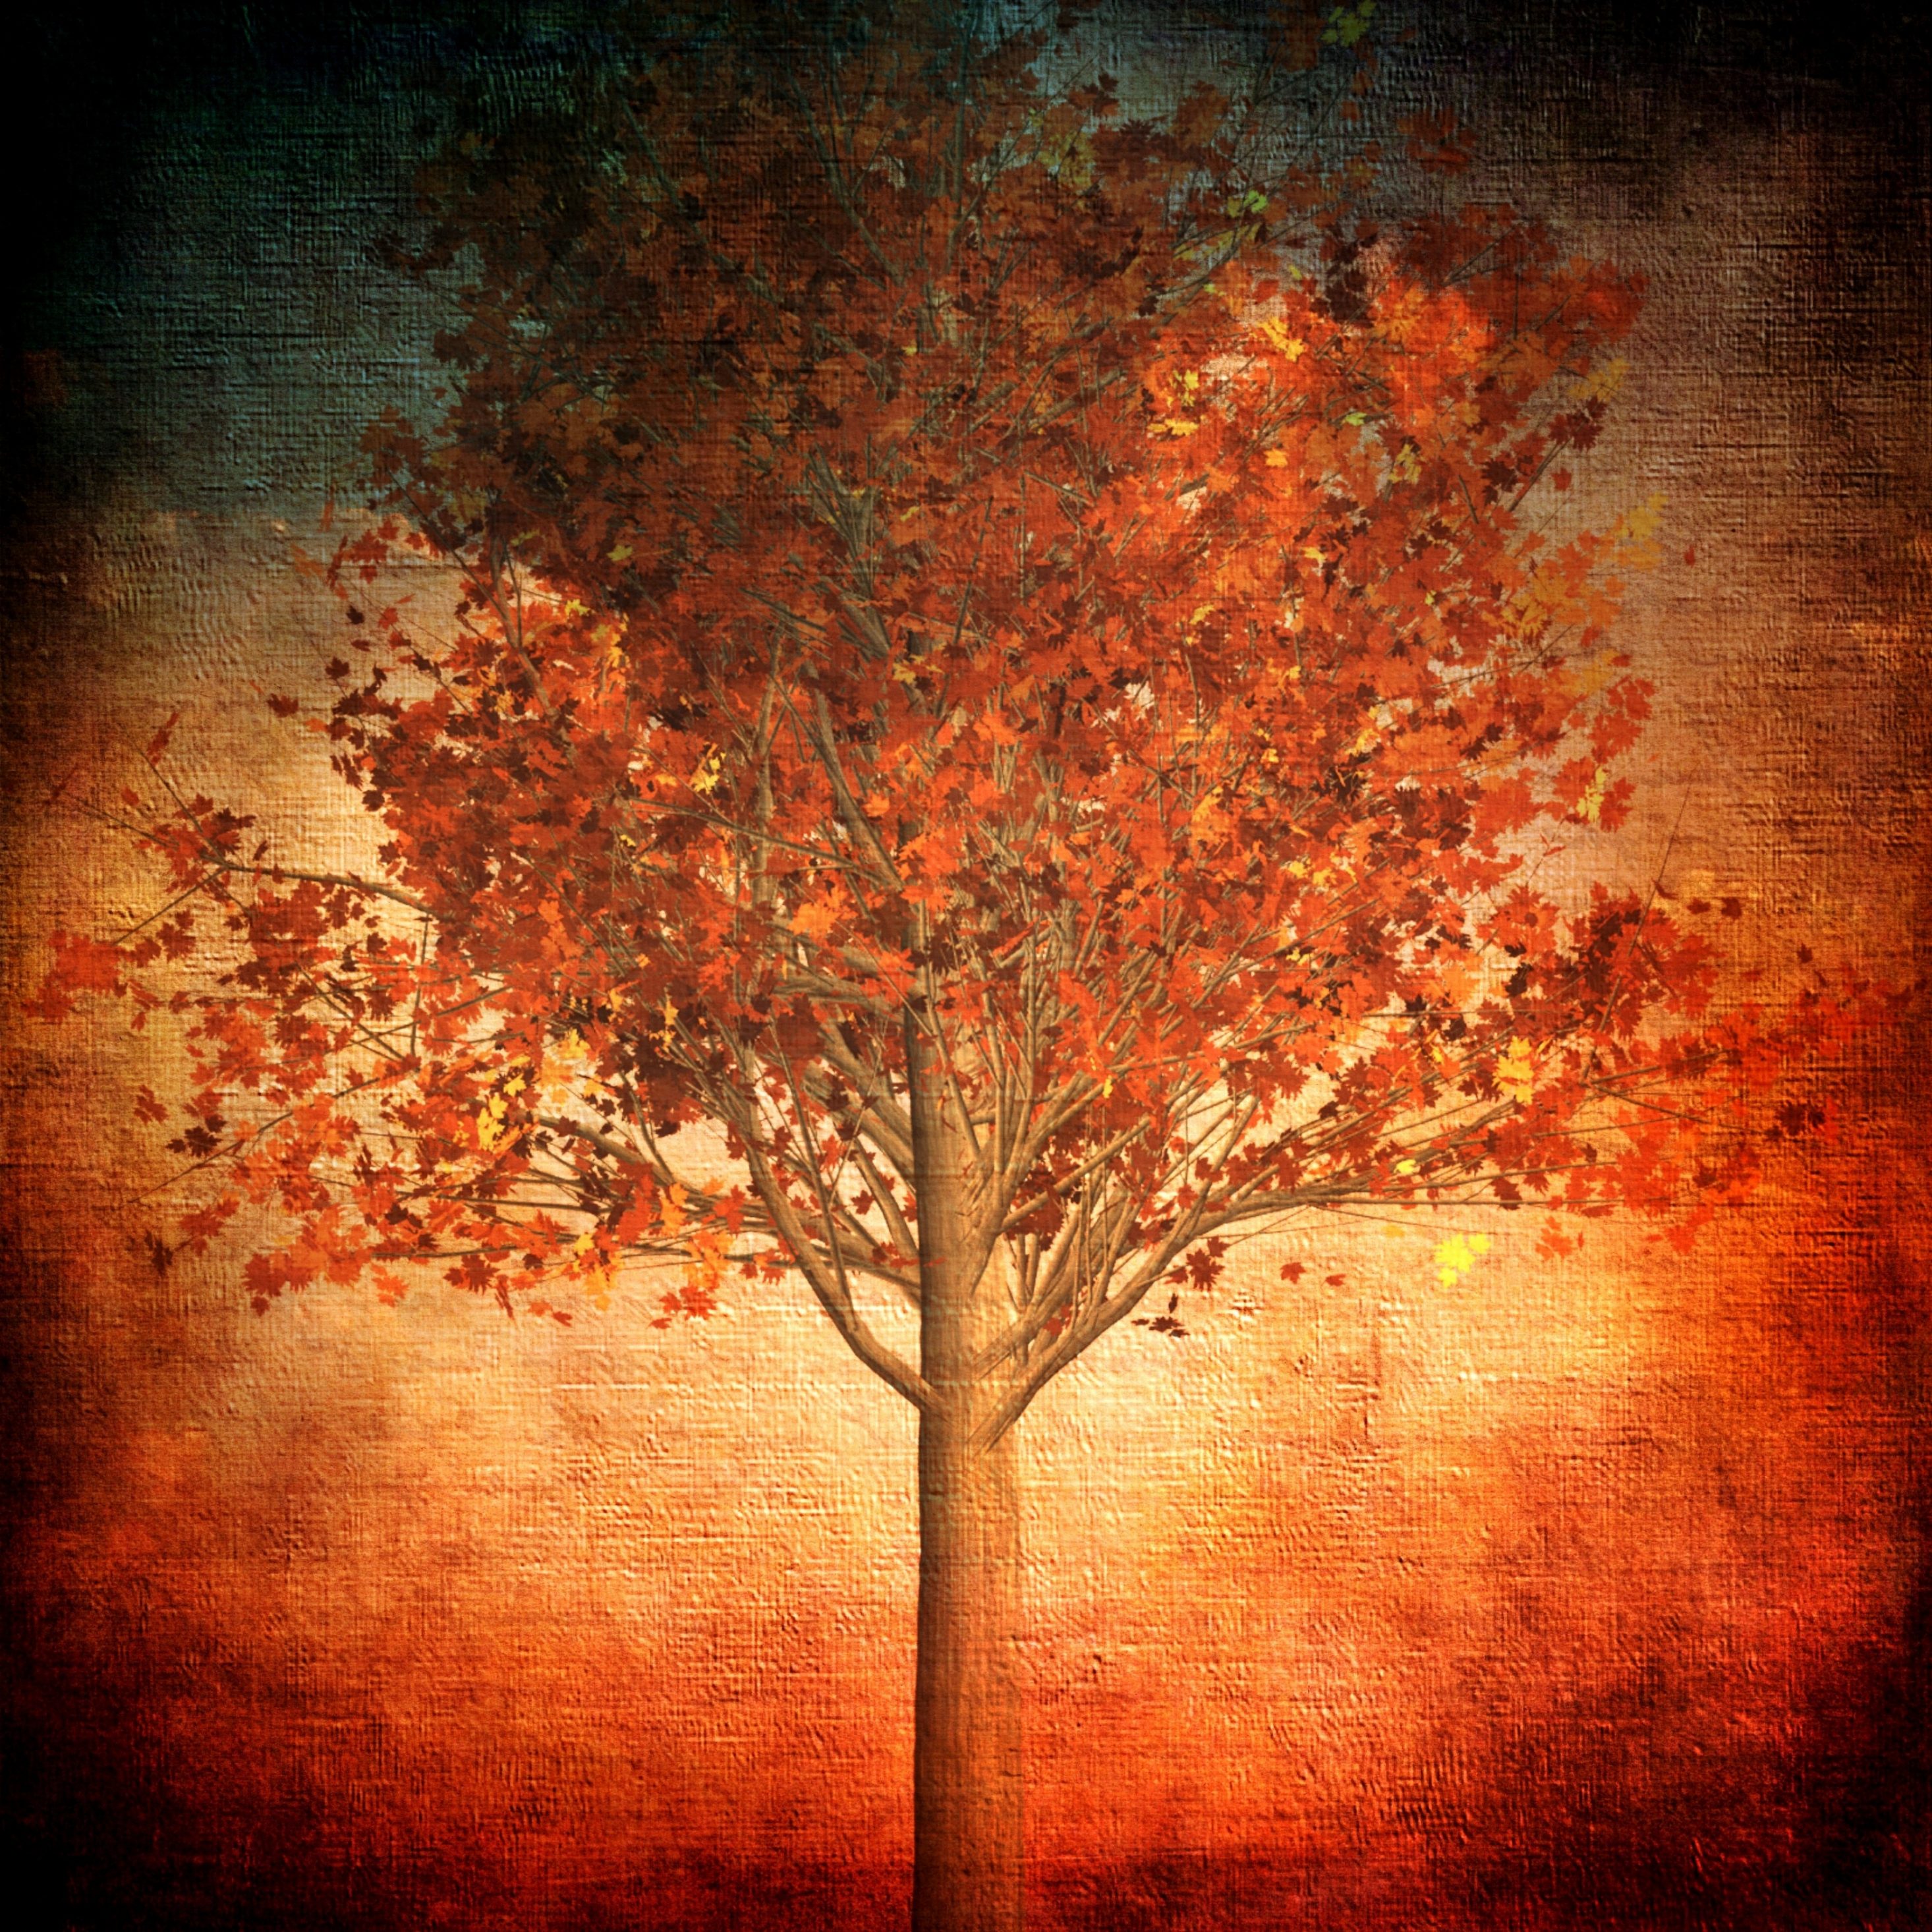 2932x2932 iPad Pro wallpaper 4k Aesthetic Autumn Red Fall Leaves Nature iPad Wallpaper 2932x2932 pixels resolution